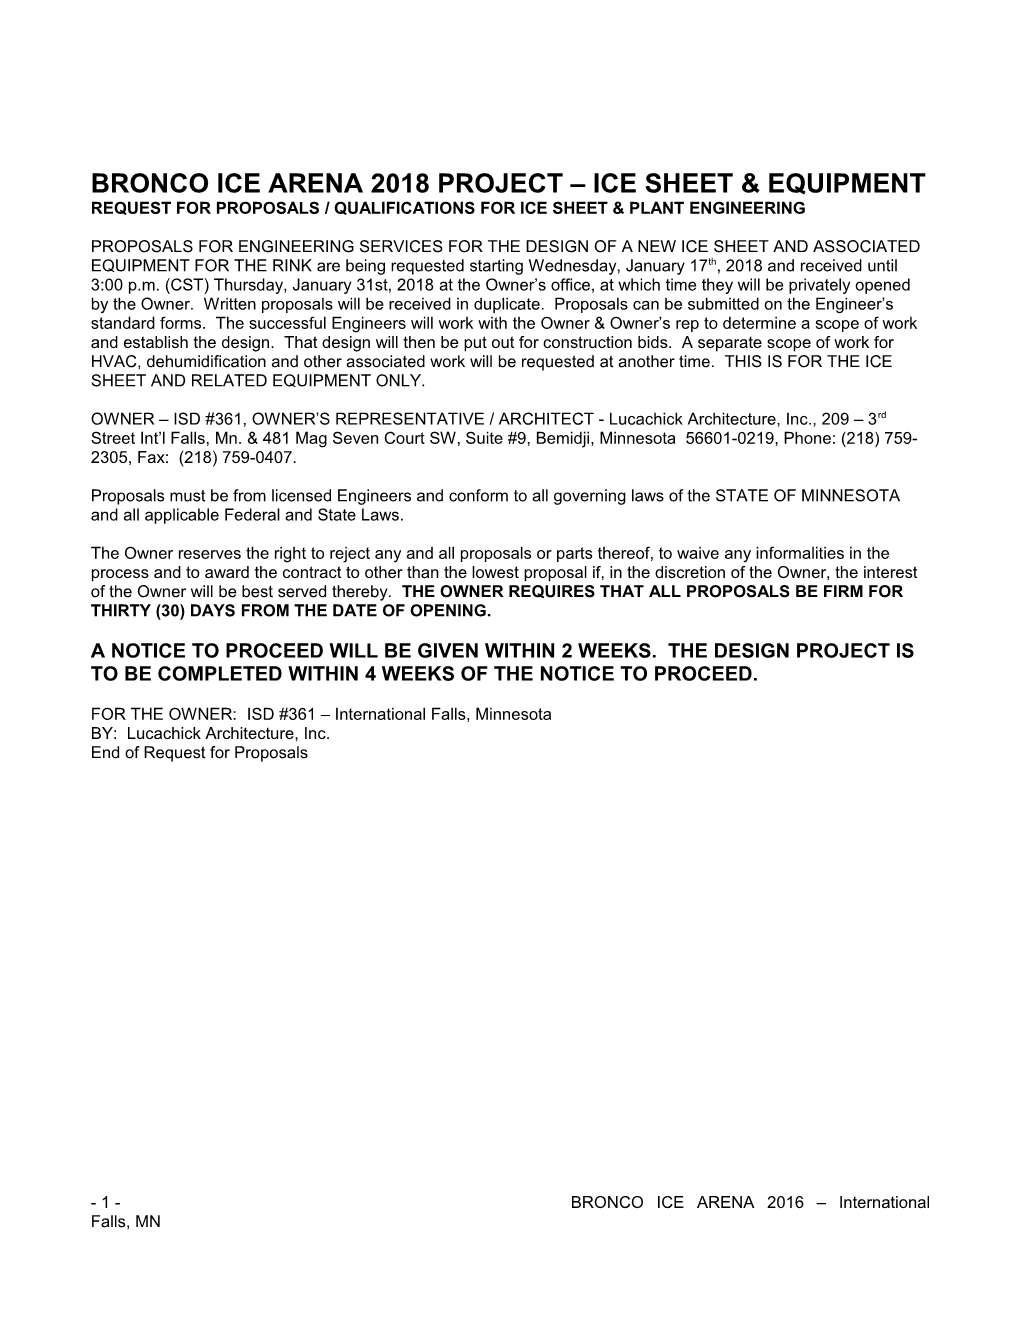 Bronco Ice Arena 2018 Project Ice Sheet & Equipment